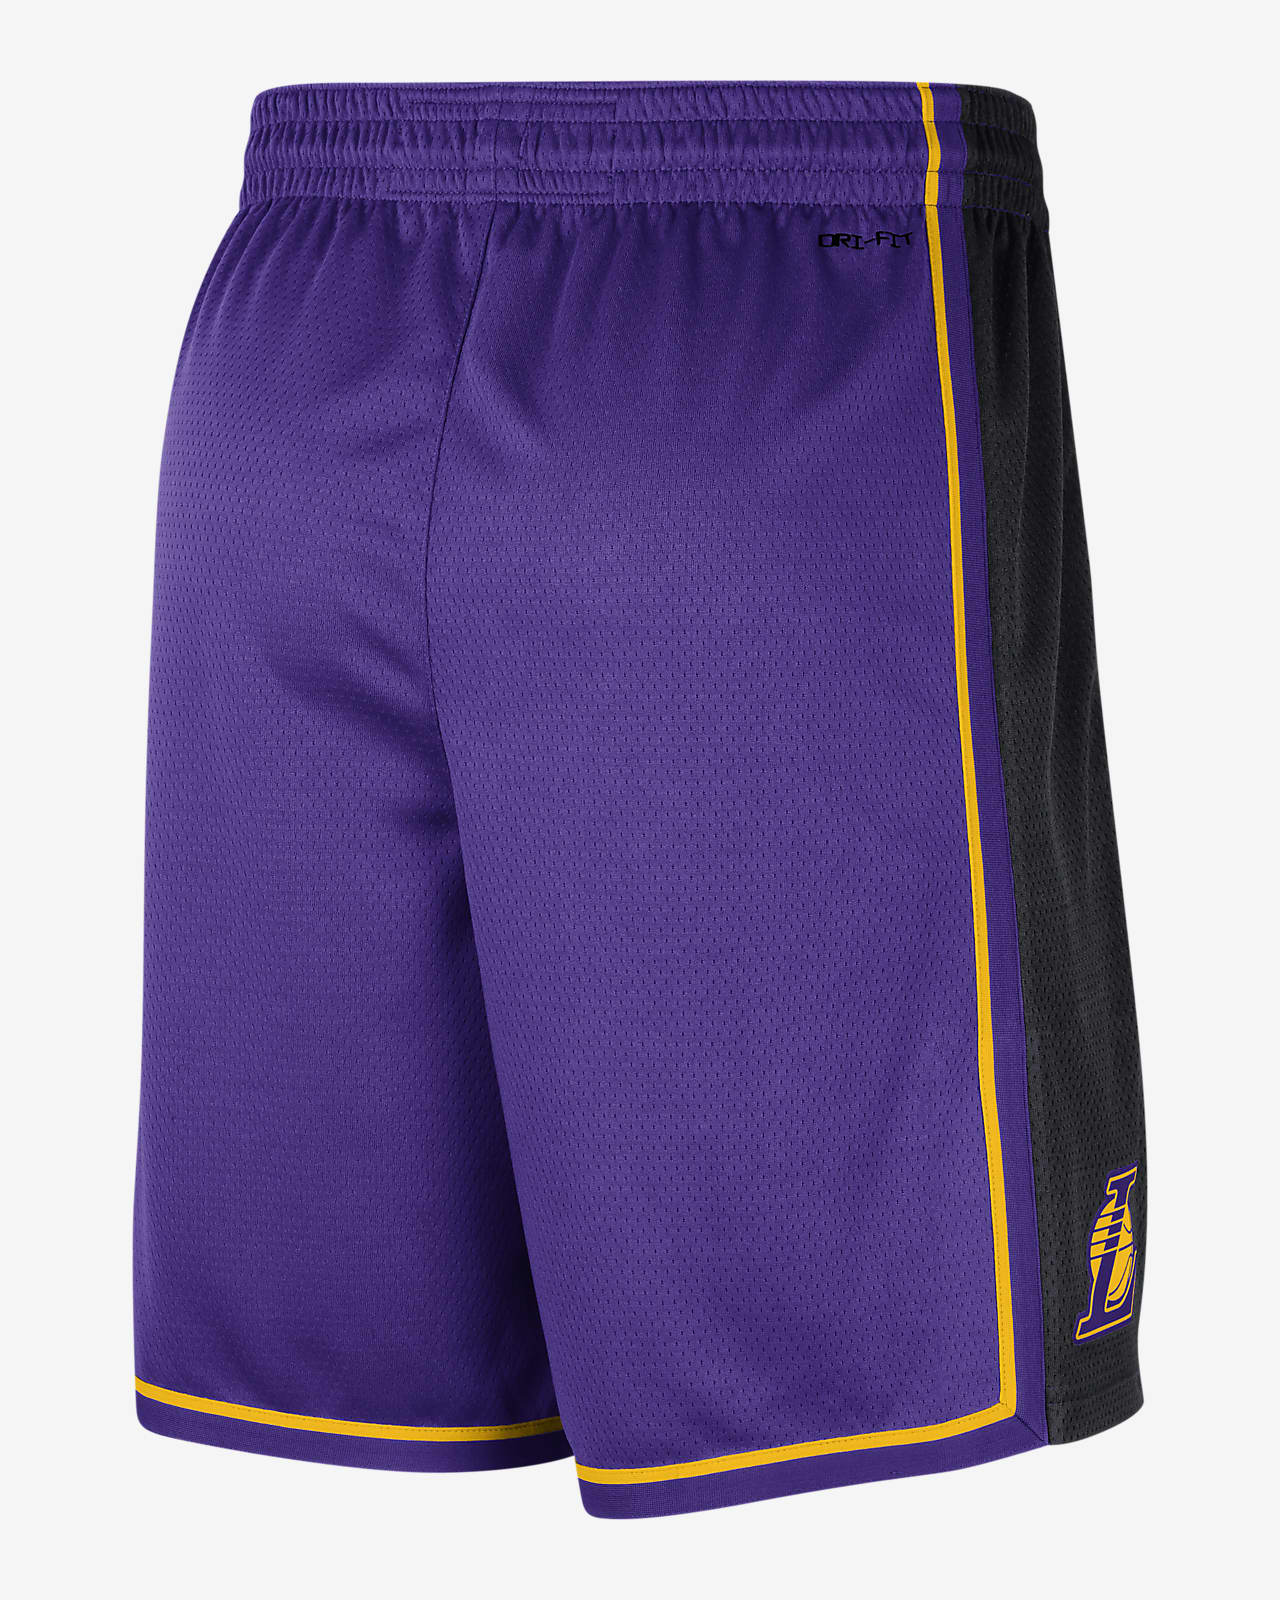 Los Angeles Lakers Statement Edition Men's Jordan Dri-FIT NBA Short-Sleeve  Top